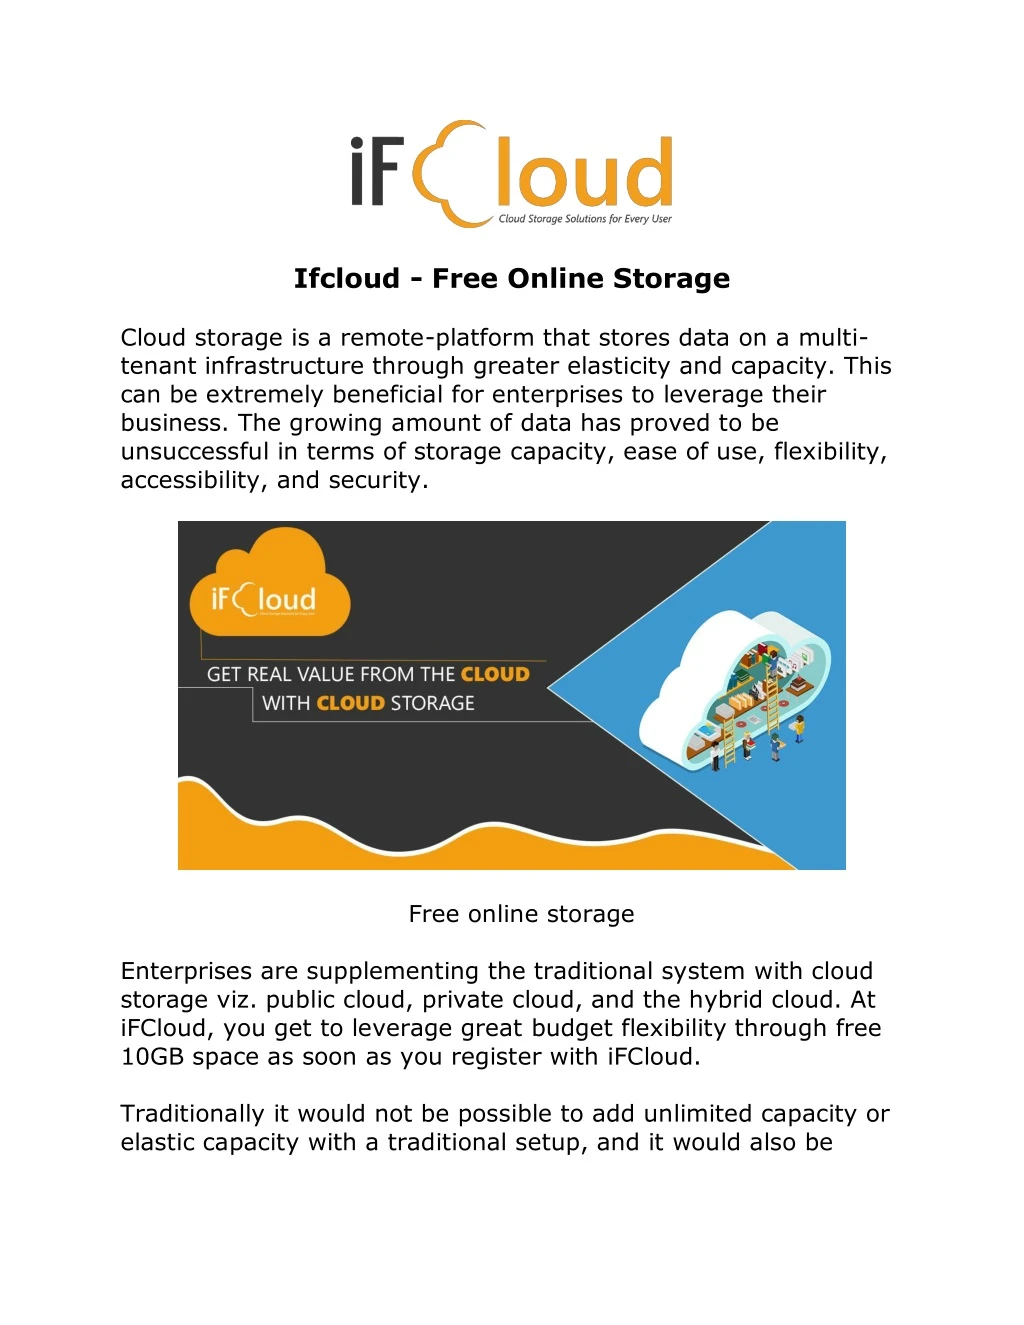 ifcloud free online storage cloud storage